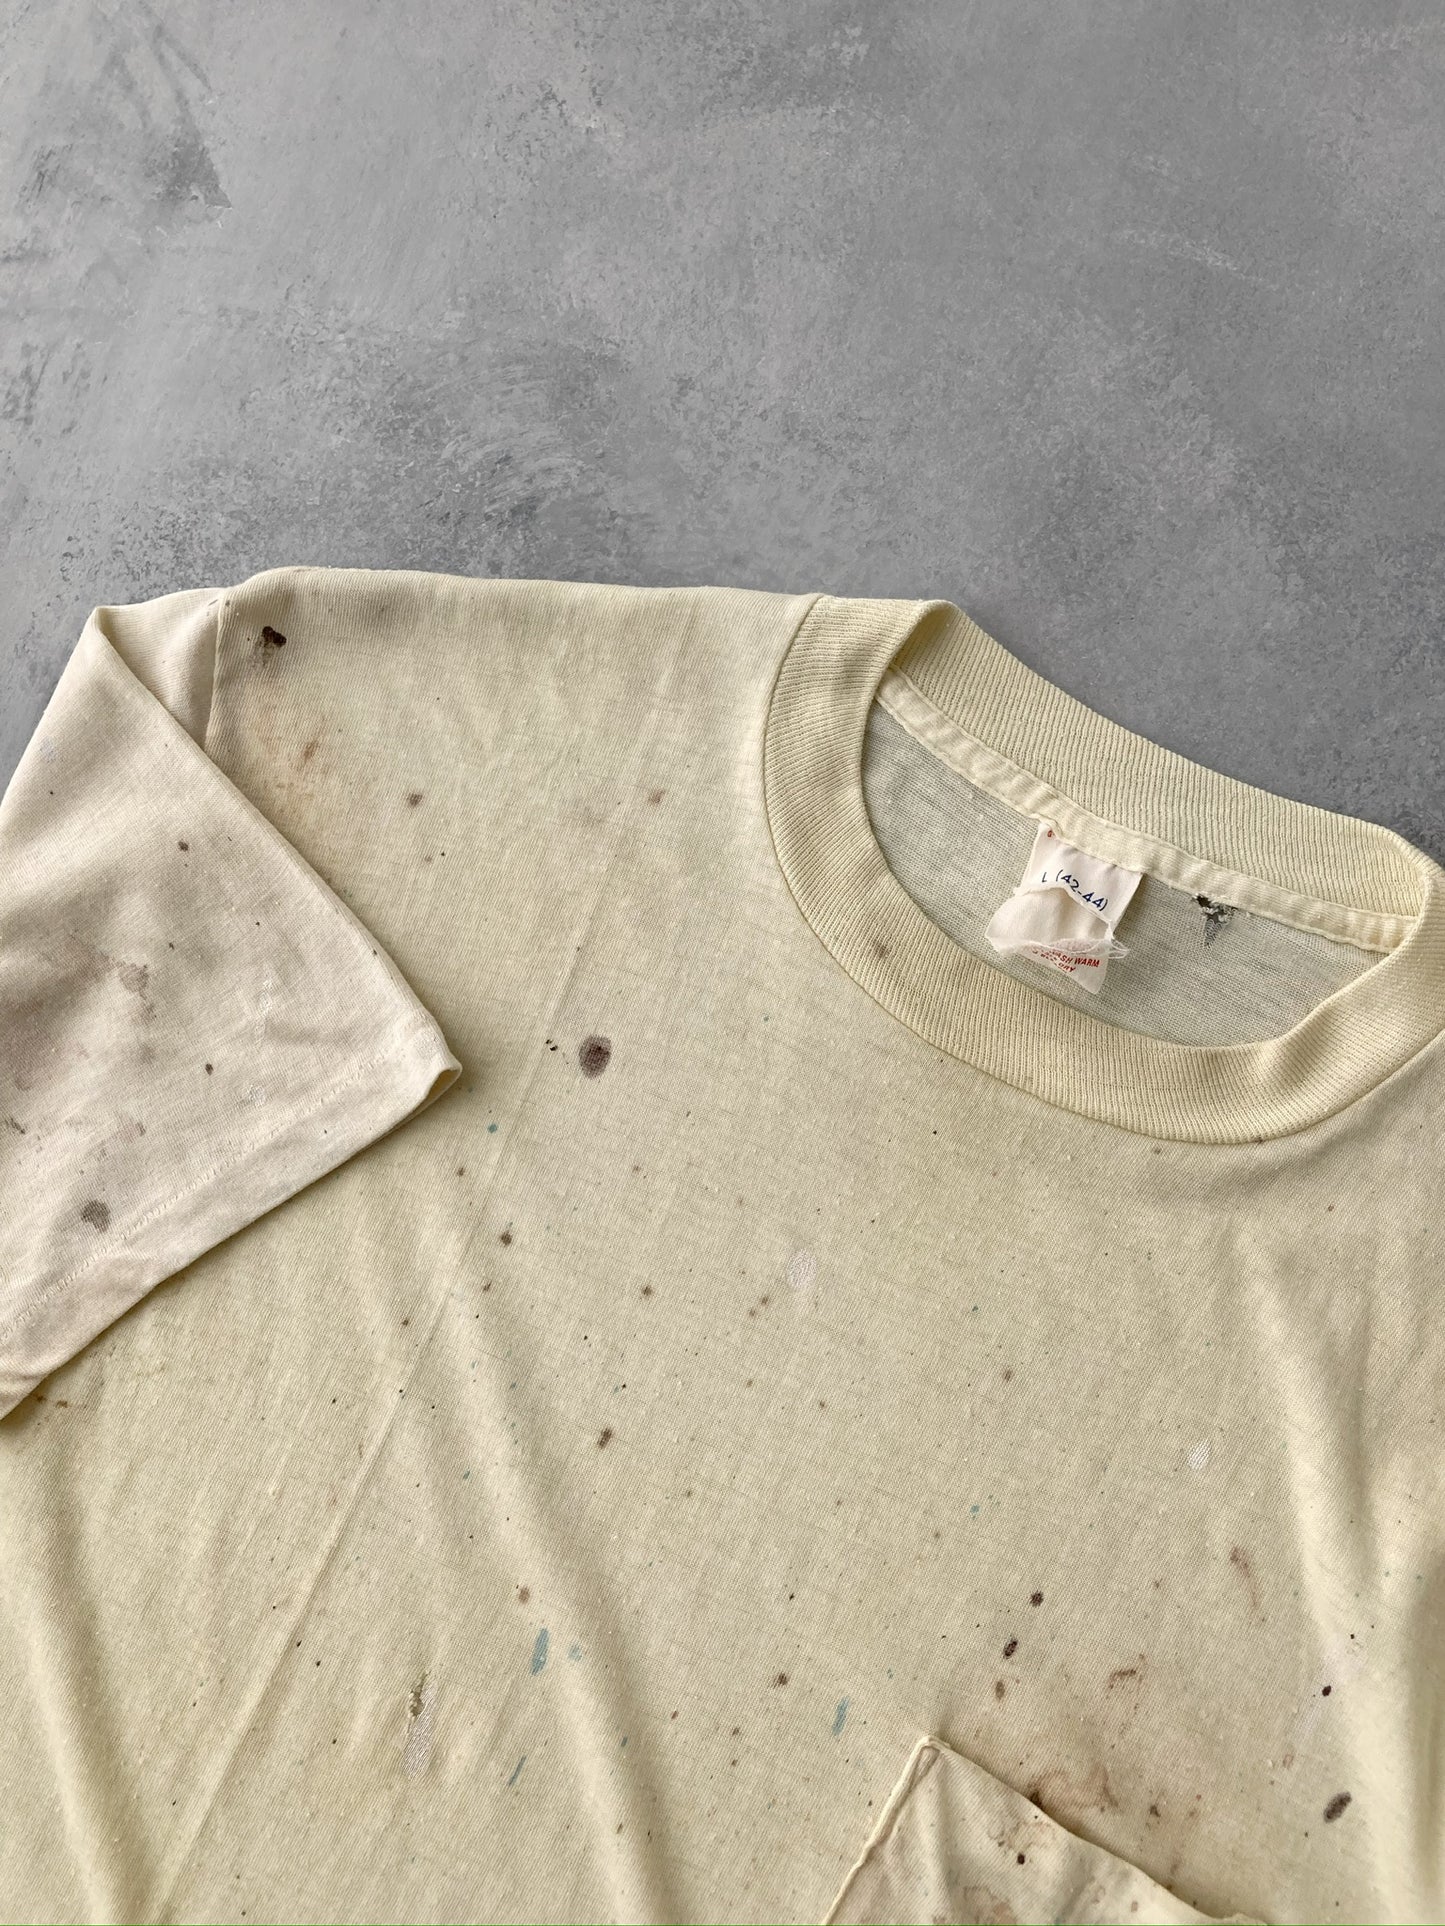 Distressed Yellow Pocket T-Shirt 70's - Medium